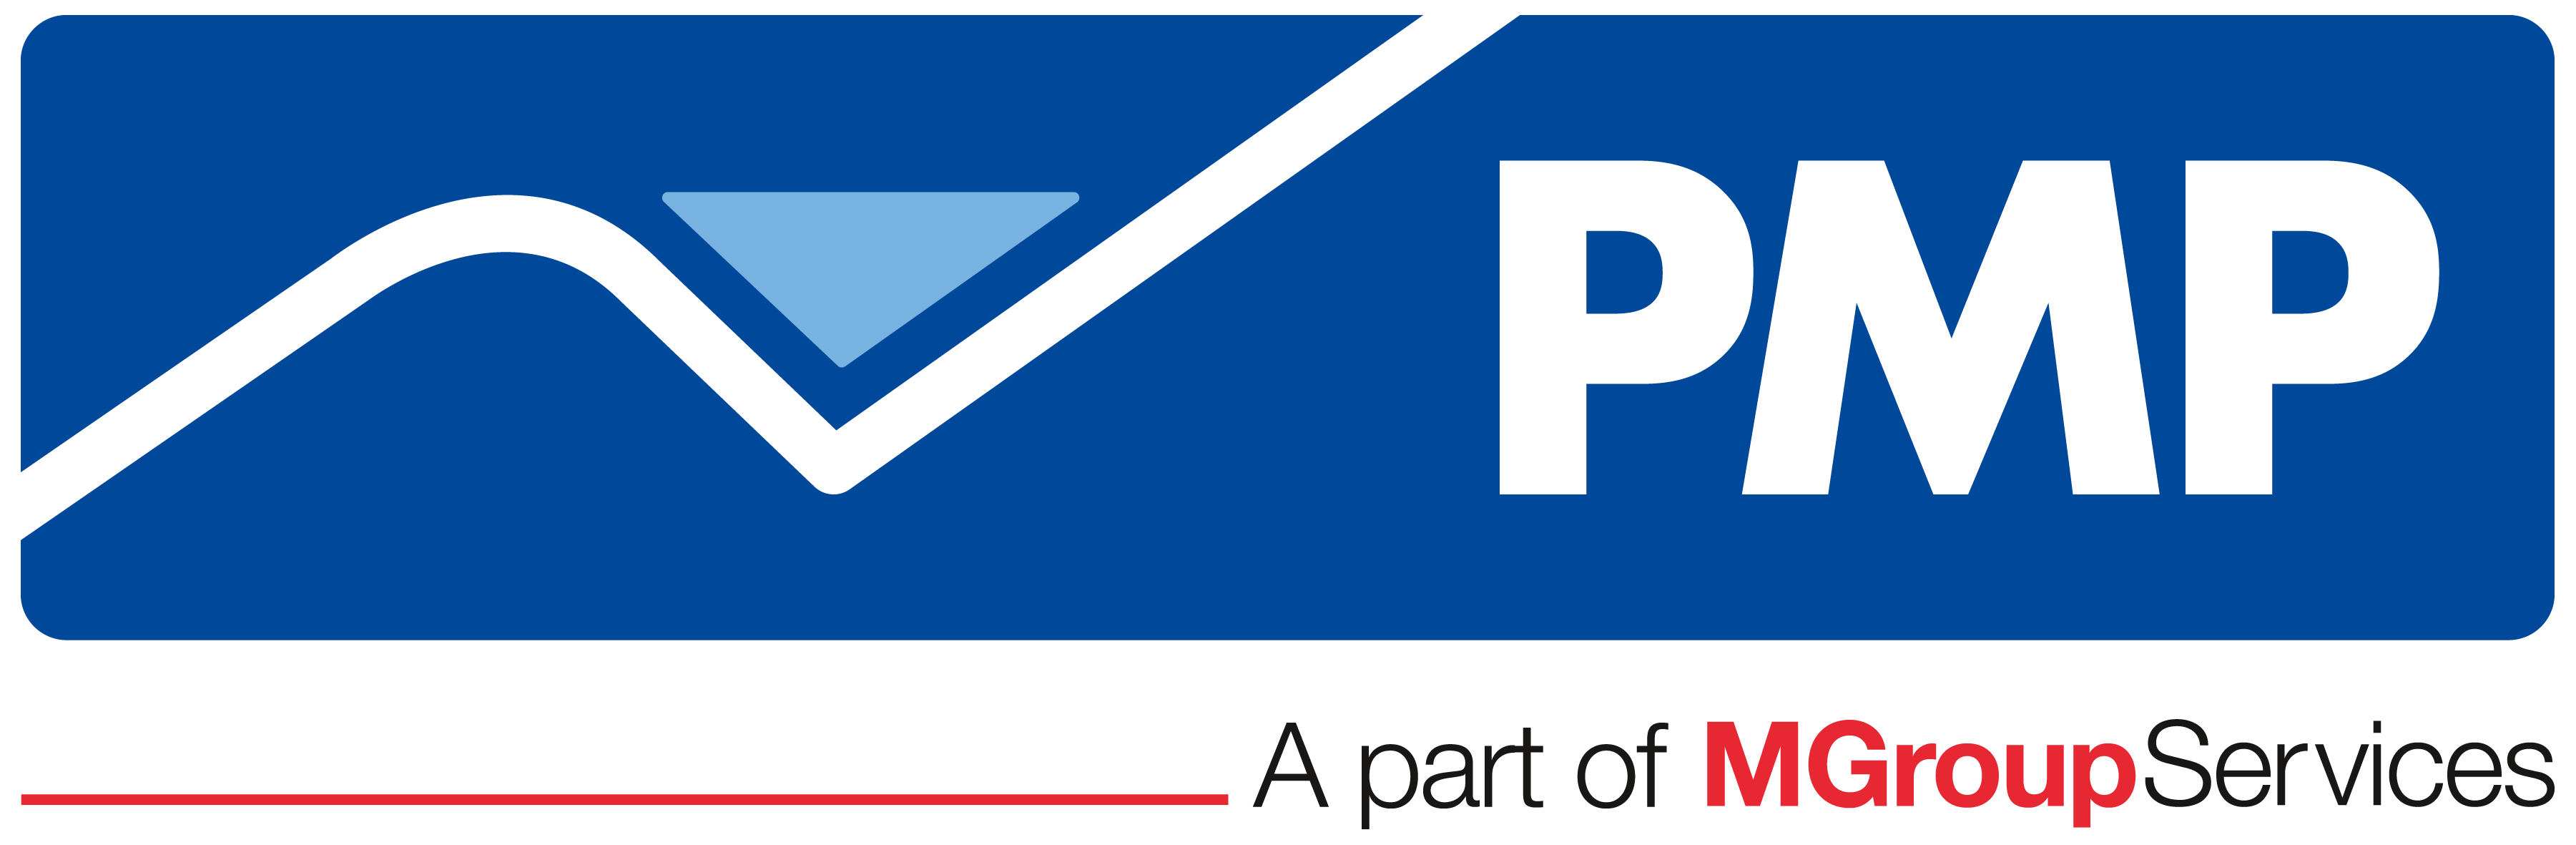 PMP-Logo-positive [BLUE].png